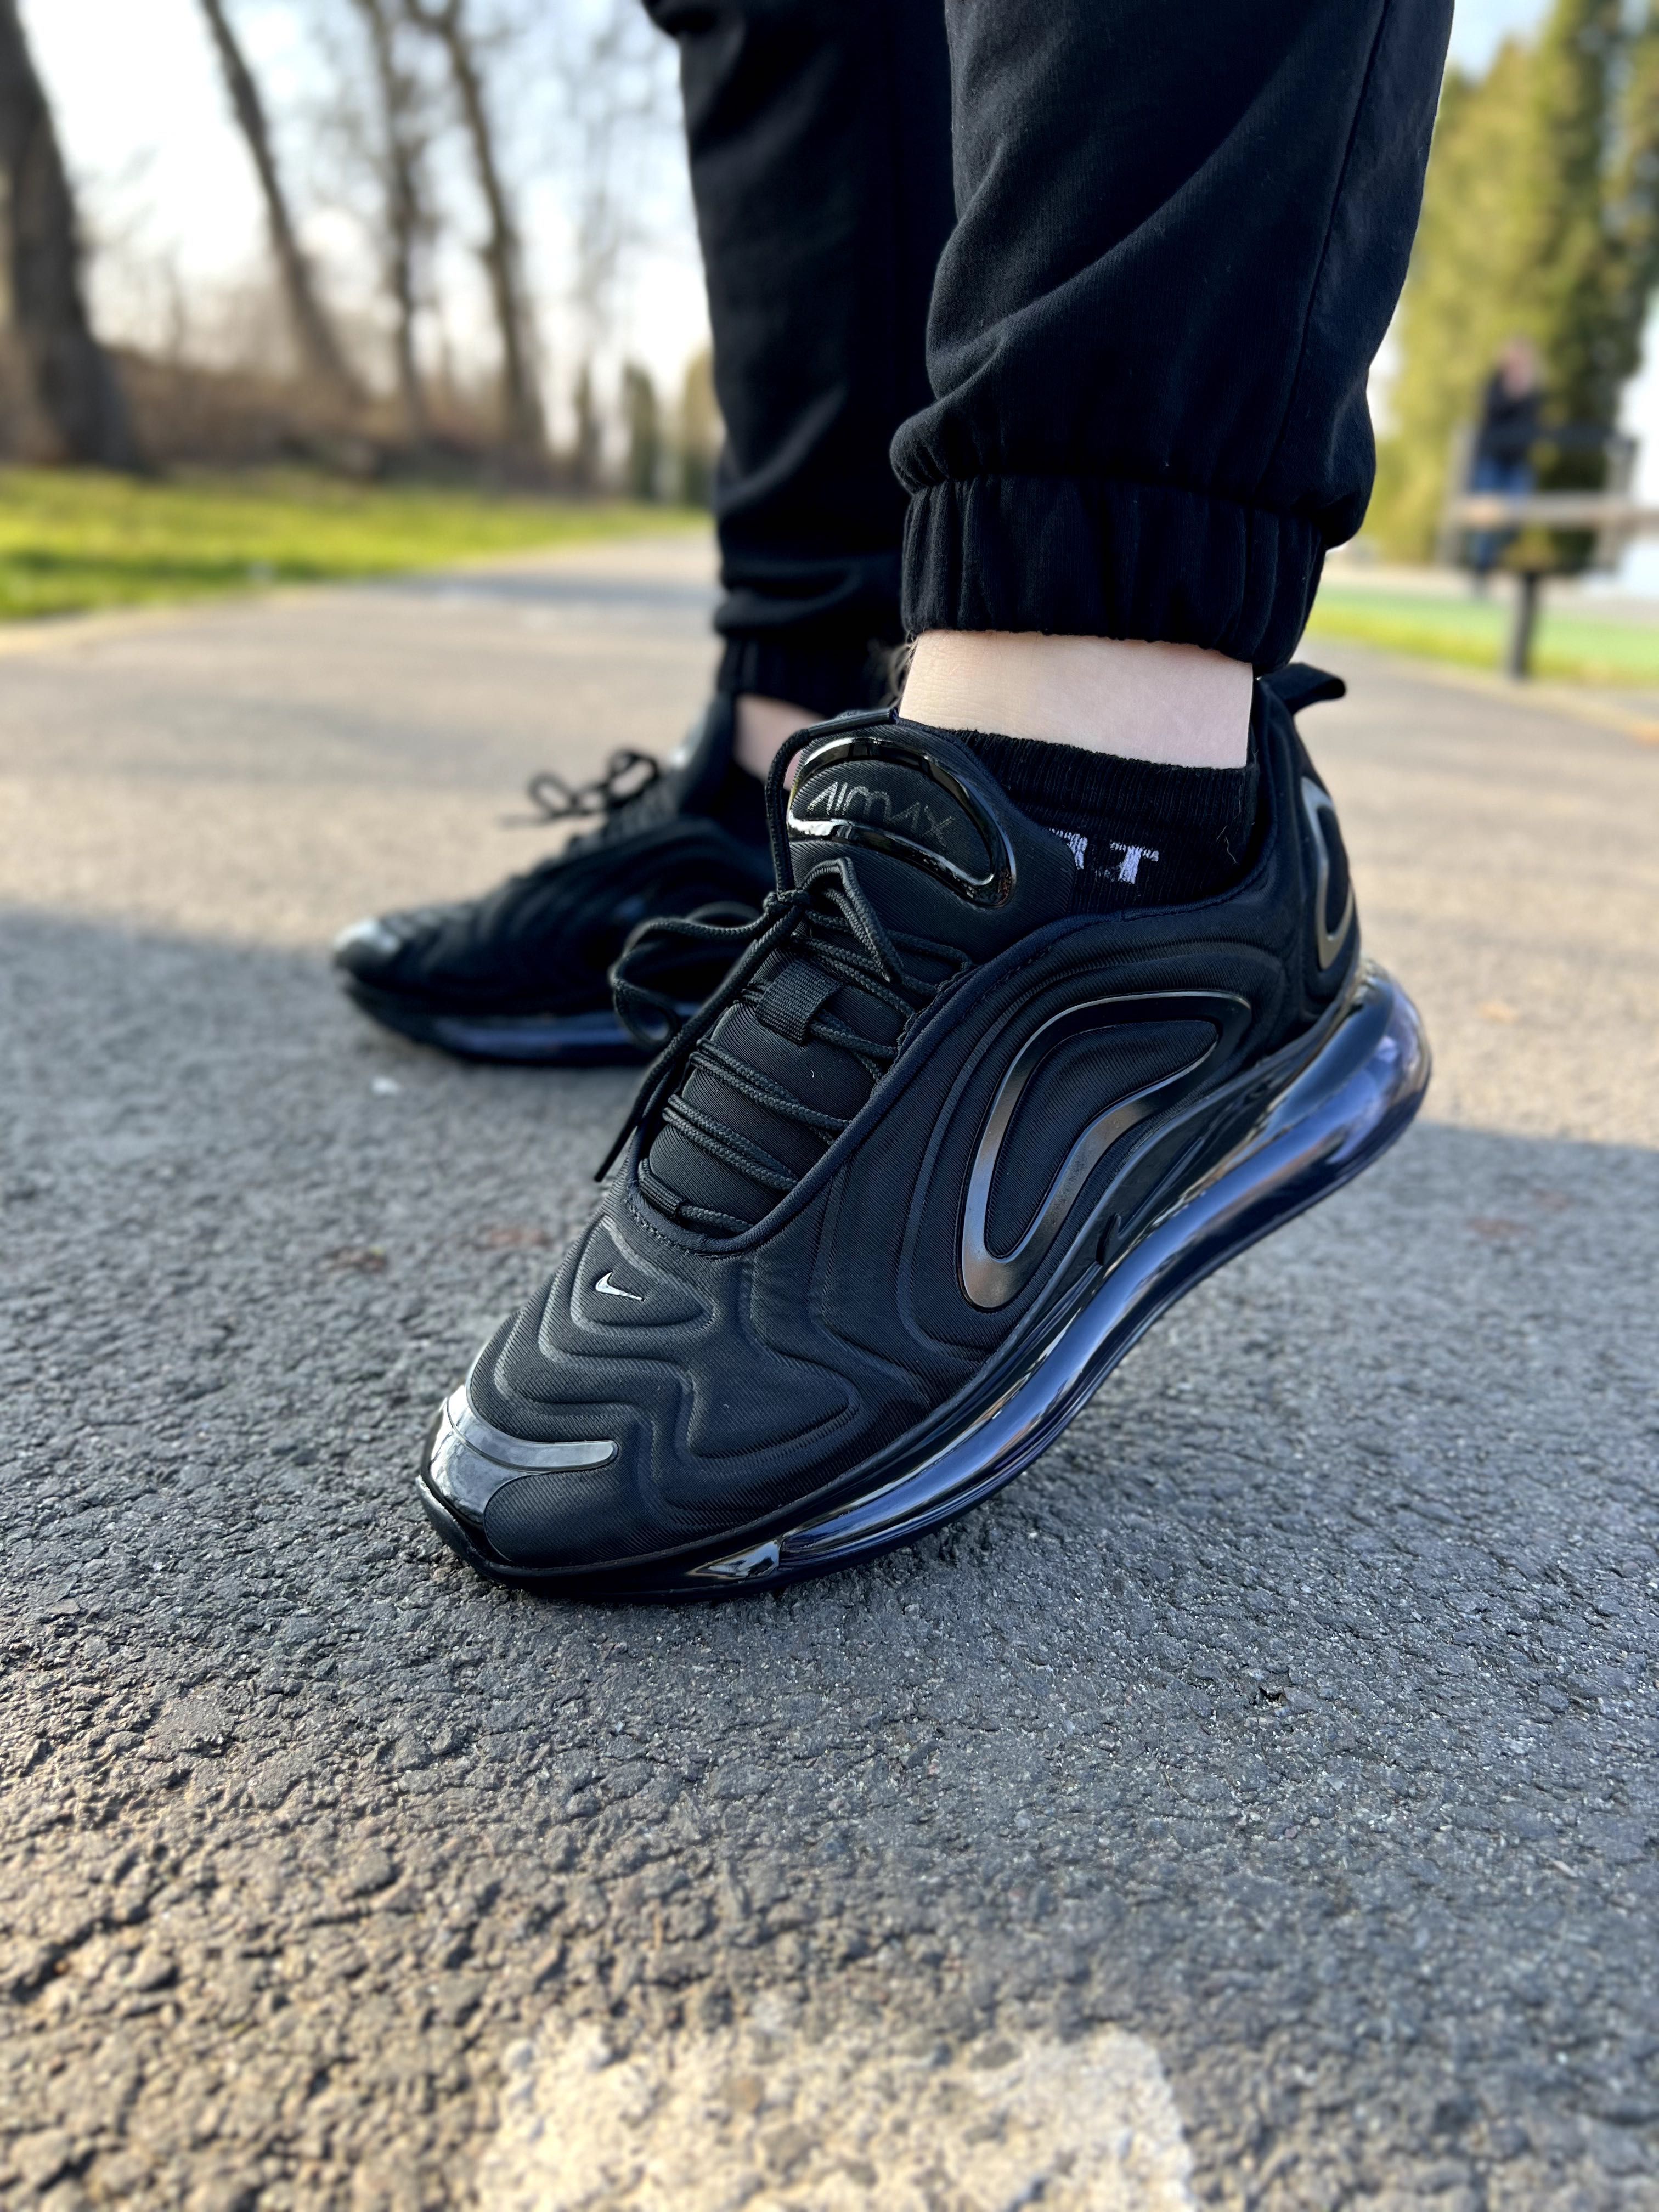 Мужские кроссовки Nike Air Max 720 Black. Размеры 40-45